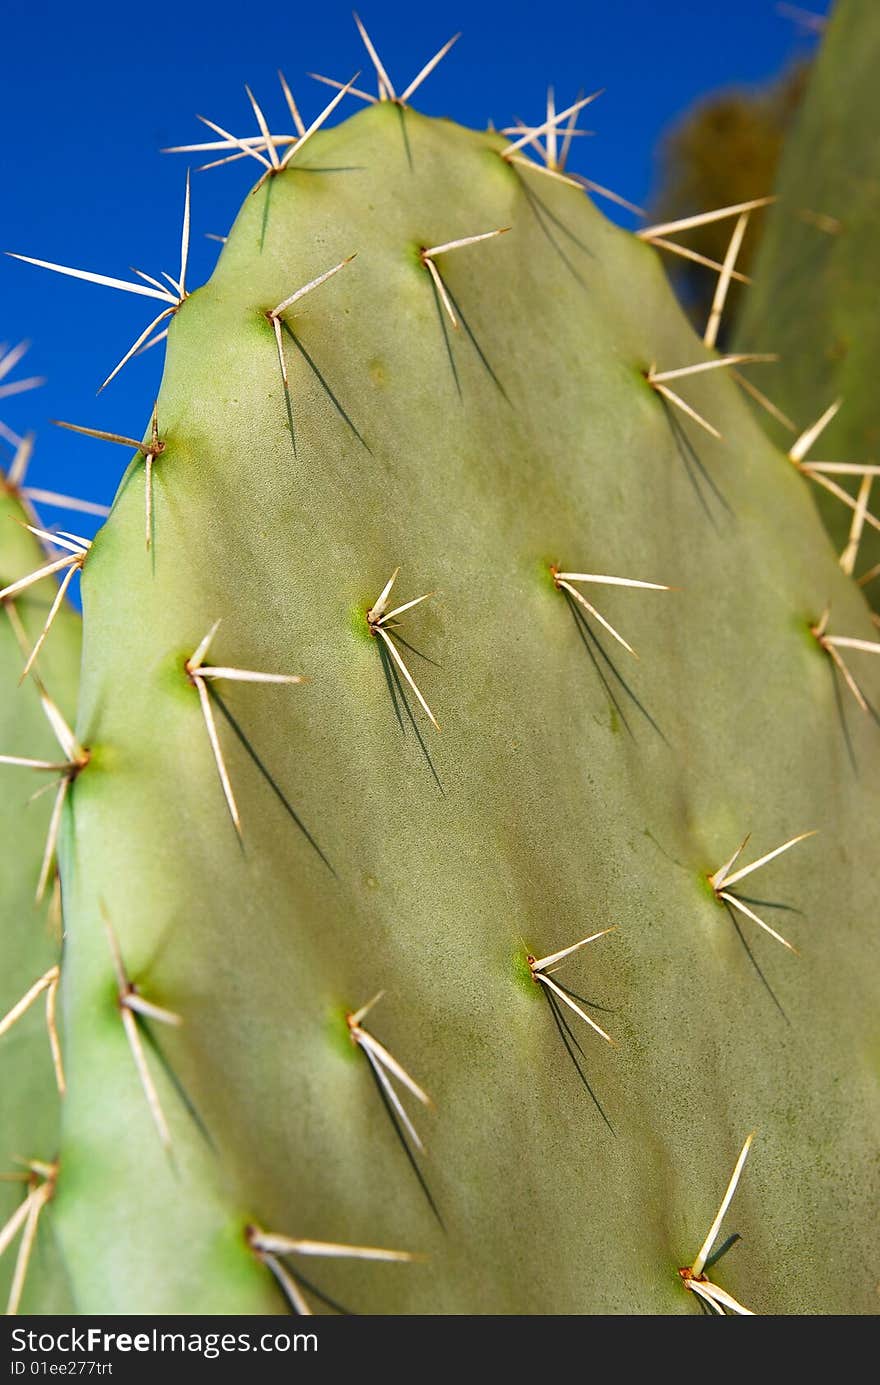 Tsabar green cactus with sharp thorns in the sunset